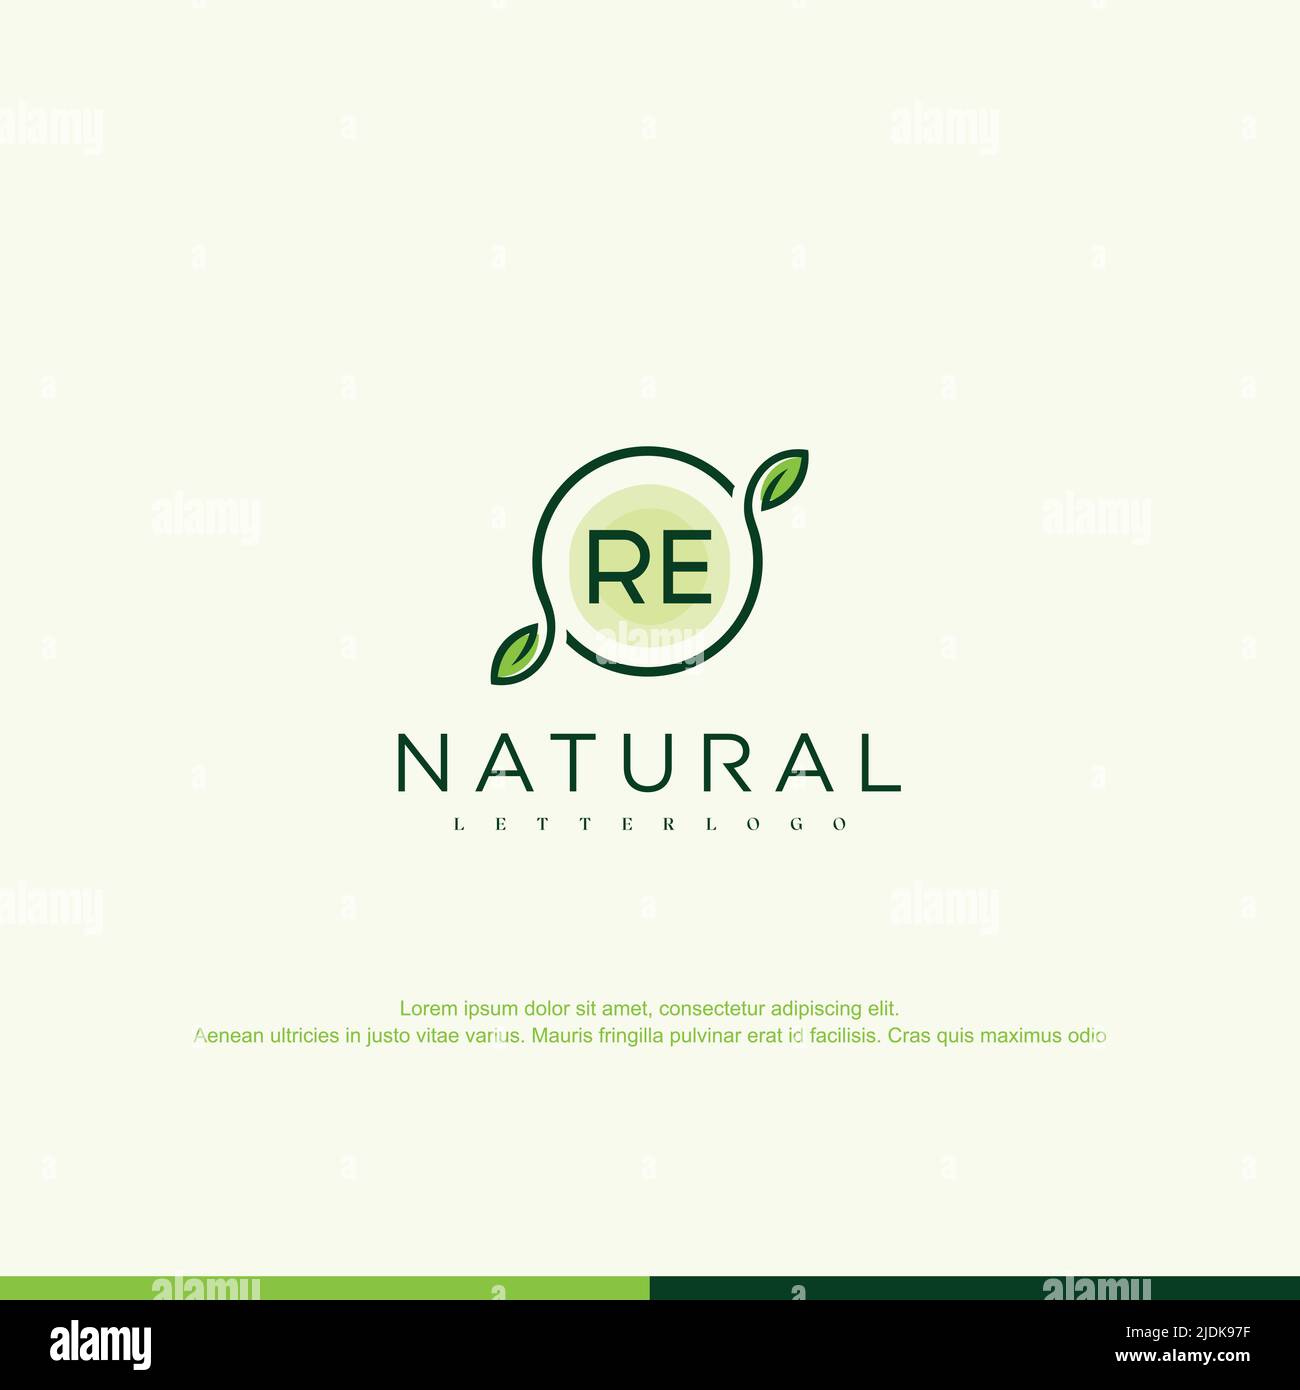 RE Initial natural logo template vector Stock Vector